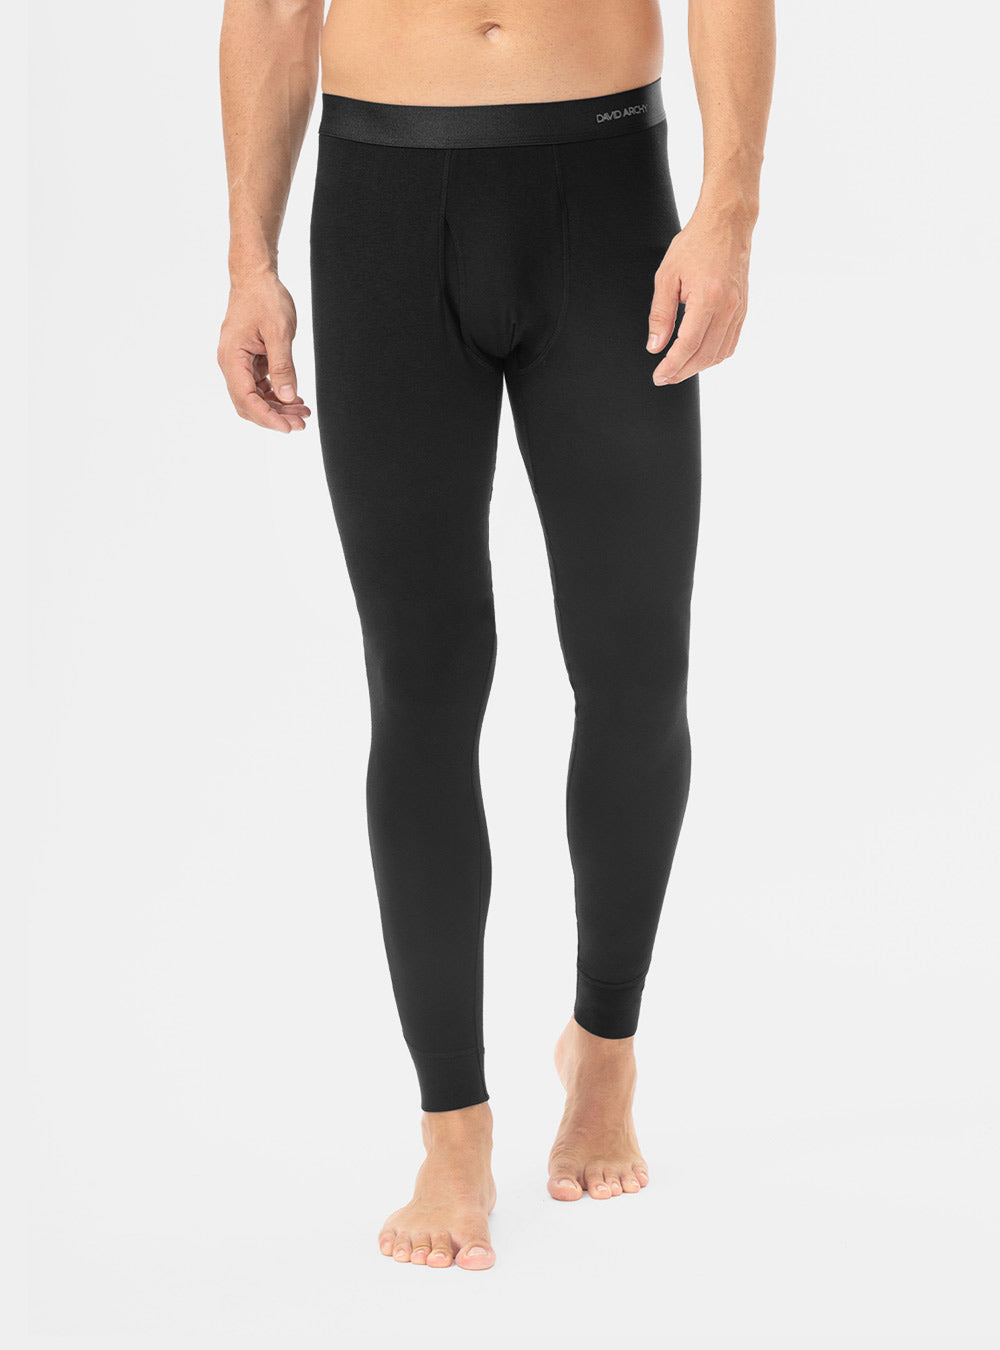 Rocky Thermal Underwear For Men (Thermal Long Johns Set) Shirt & Pants,  Base Layer w/Leggings/Bottoms Ski/Extreme Cold, White, 4X-Large price in  Saudi Arabia,  Saudi Arabia